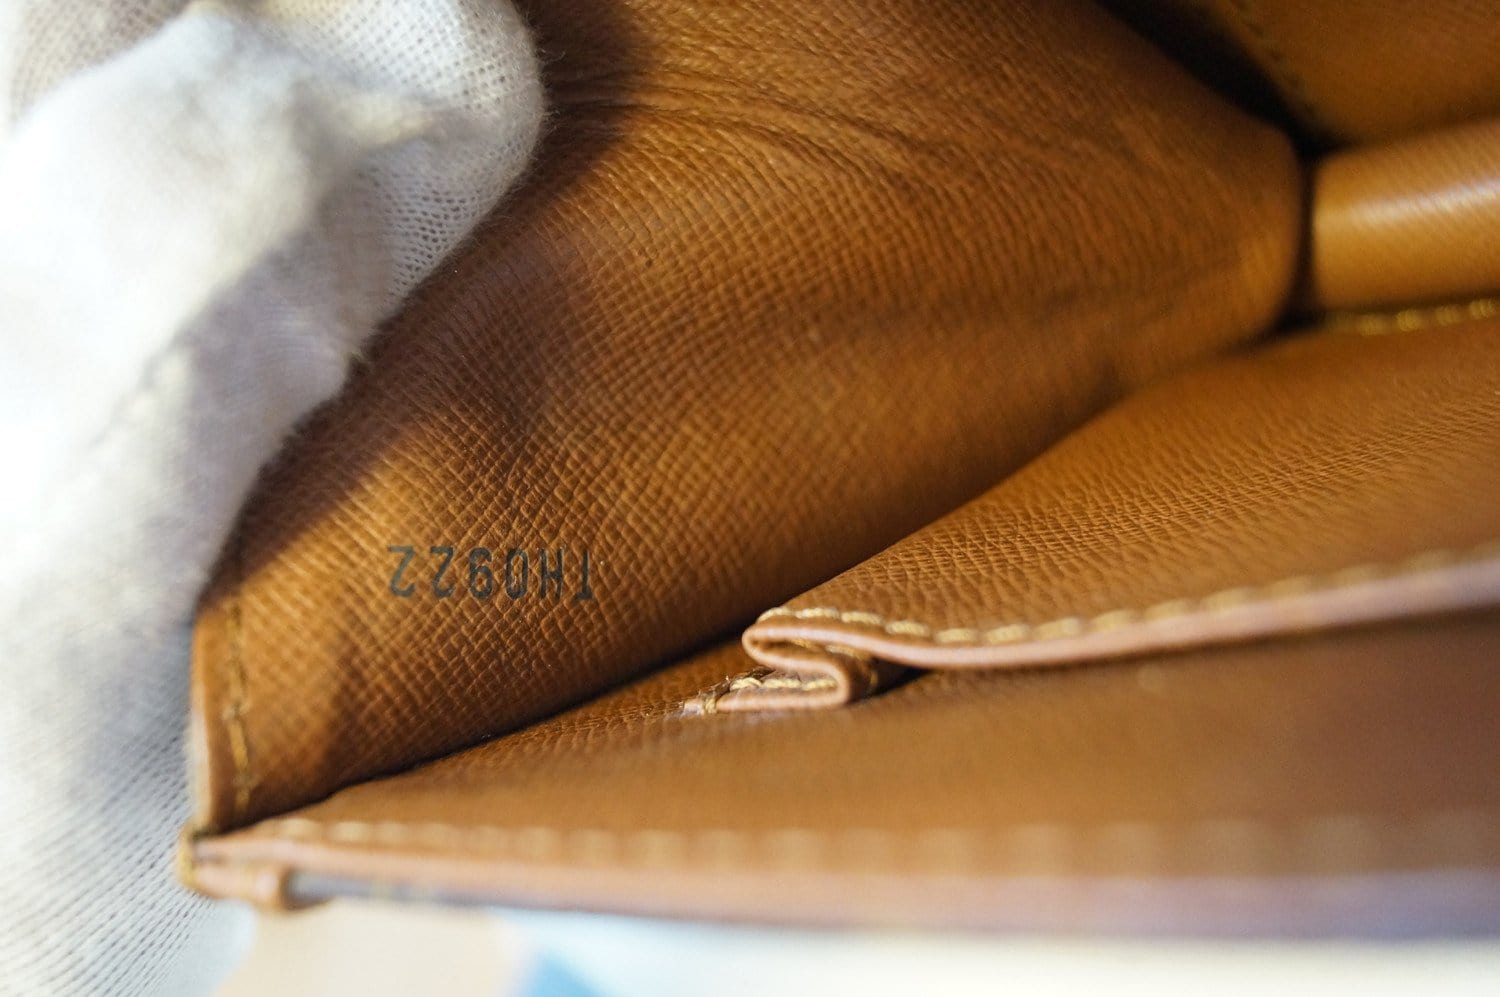 Vintage Louis Vuitton Pochette Kourad Clutch Bag Review, HOW MUCH I PAID